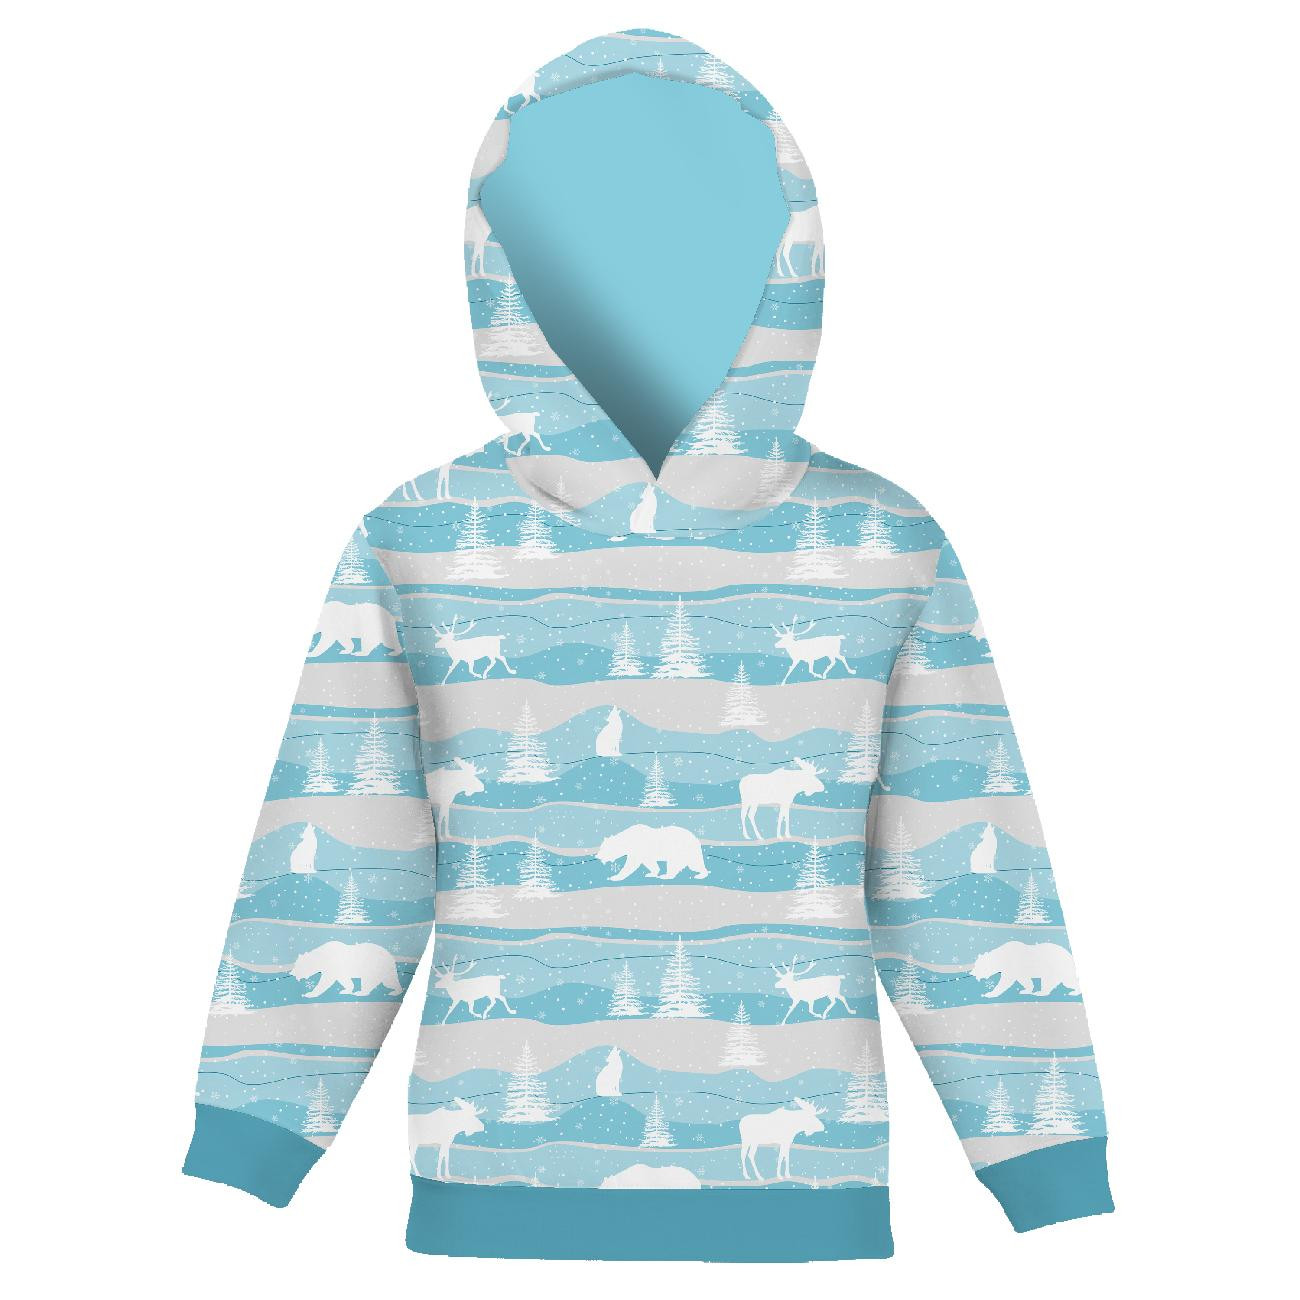 KID'S HOODIE (ALEX) - Alaska / light blue - sewing set